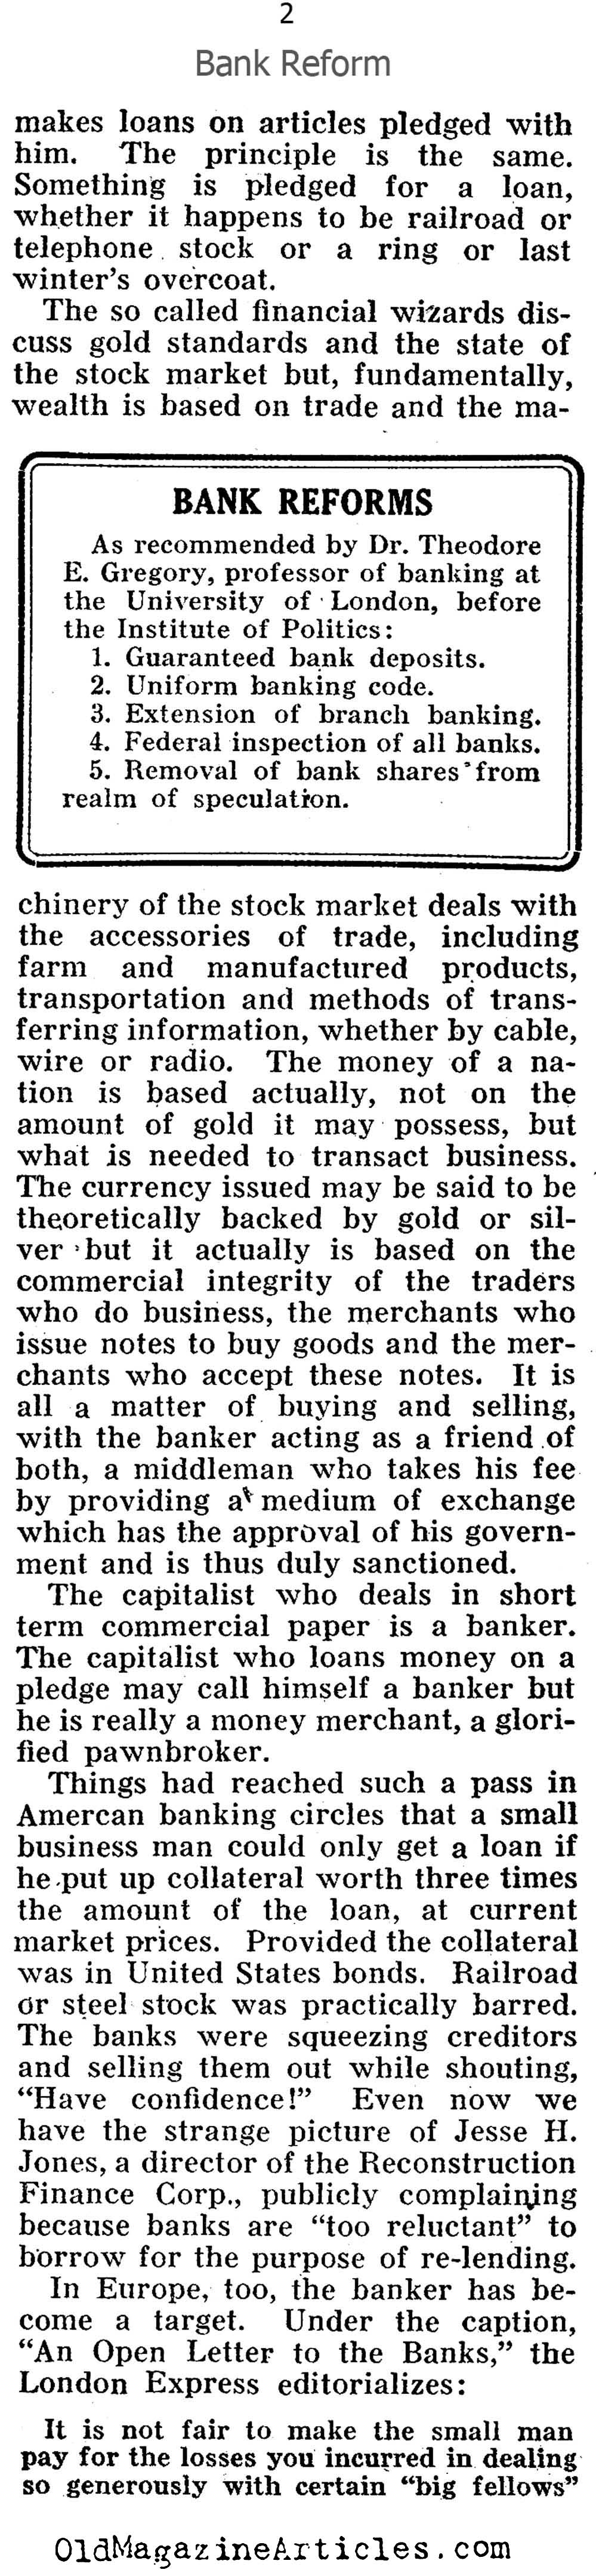 Reform The Banks! (Pathfinder Magazine, 1932)